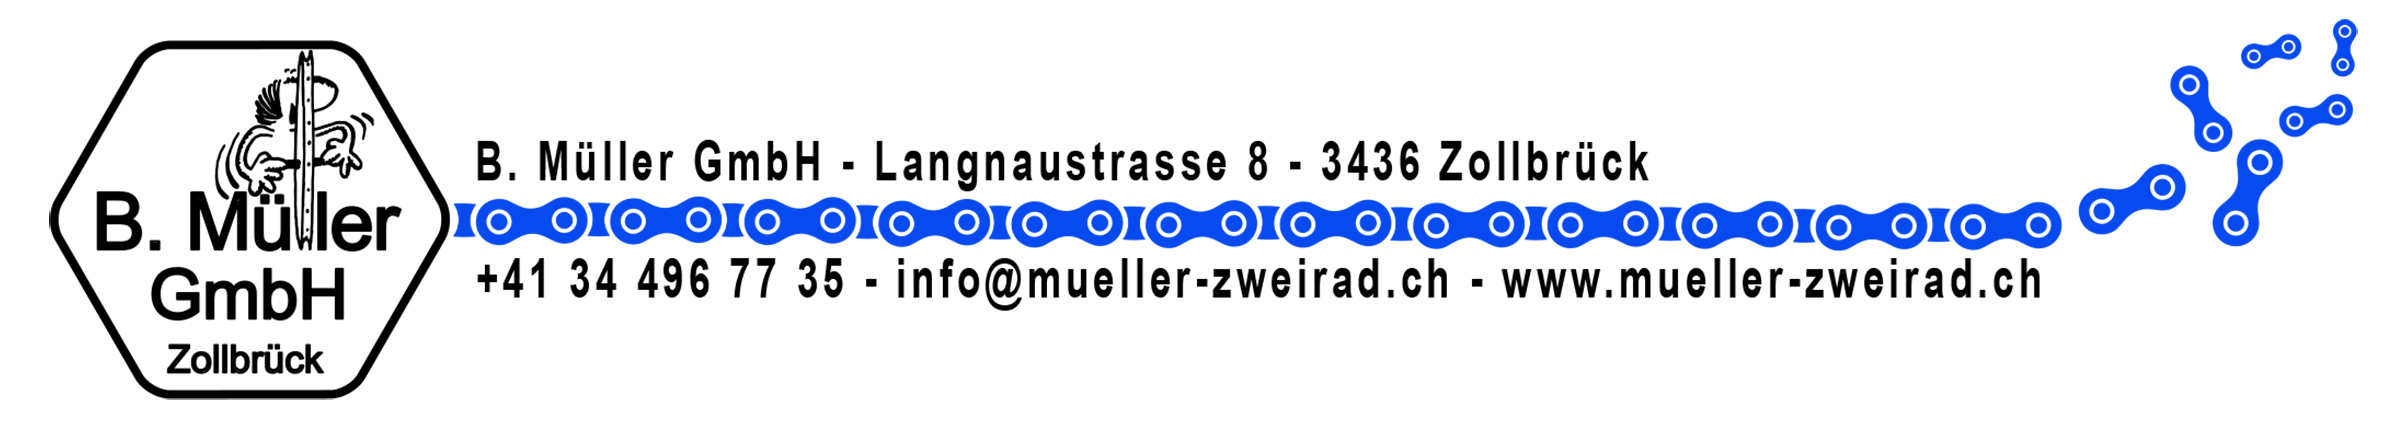 B. Müller GmbH Logo neu